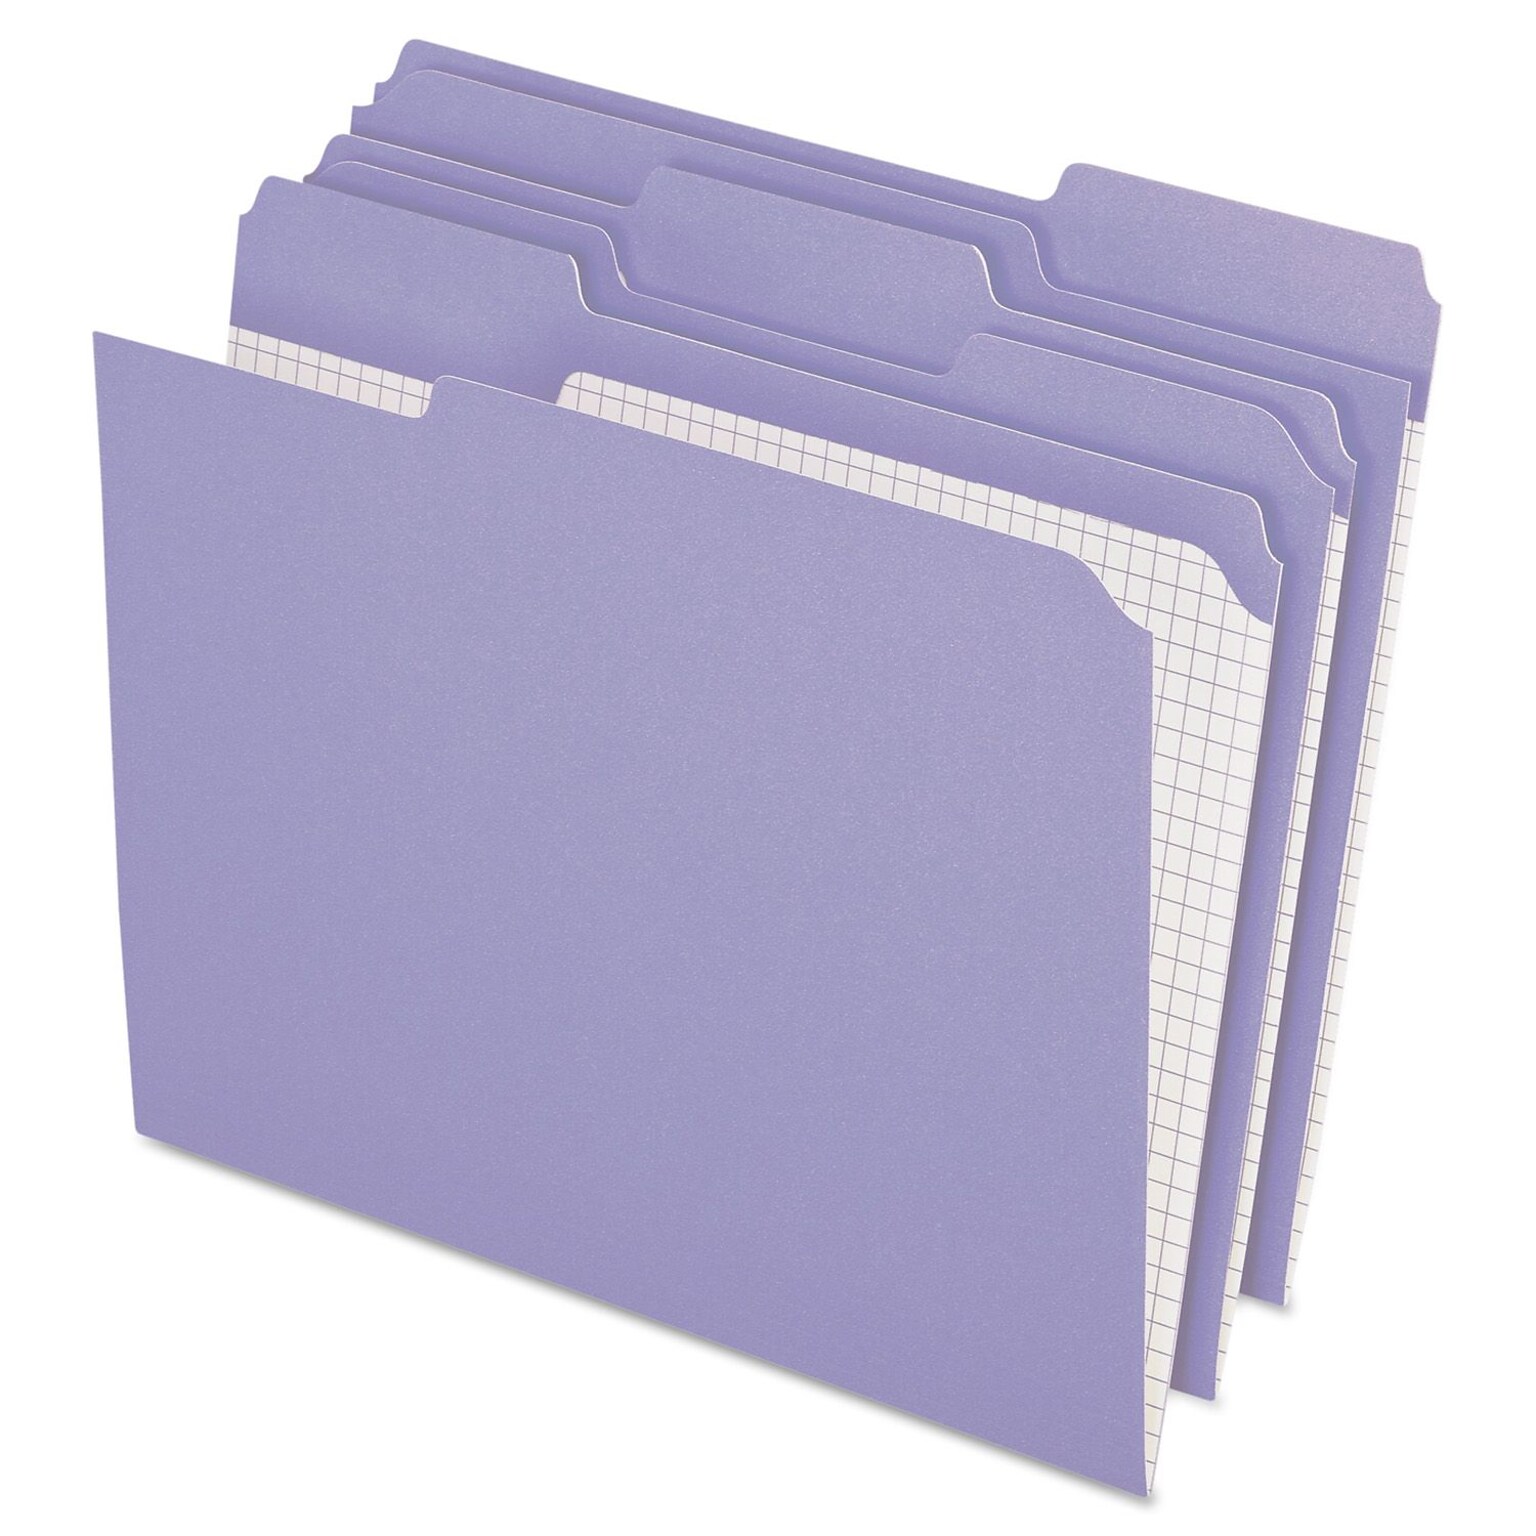 Pendaflex Two-Tone File Folder, 3 Tab, Letter Size, Lavender, 100/Box (PFX R152 1/3 LAV)